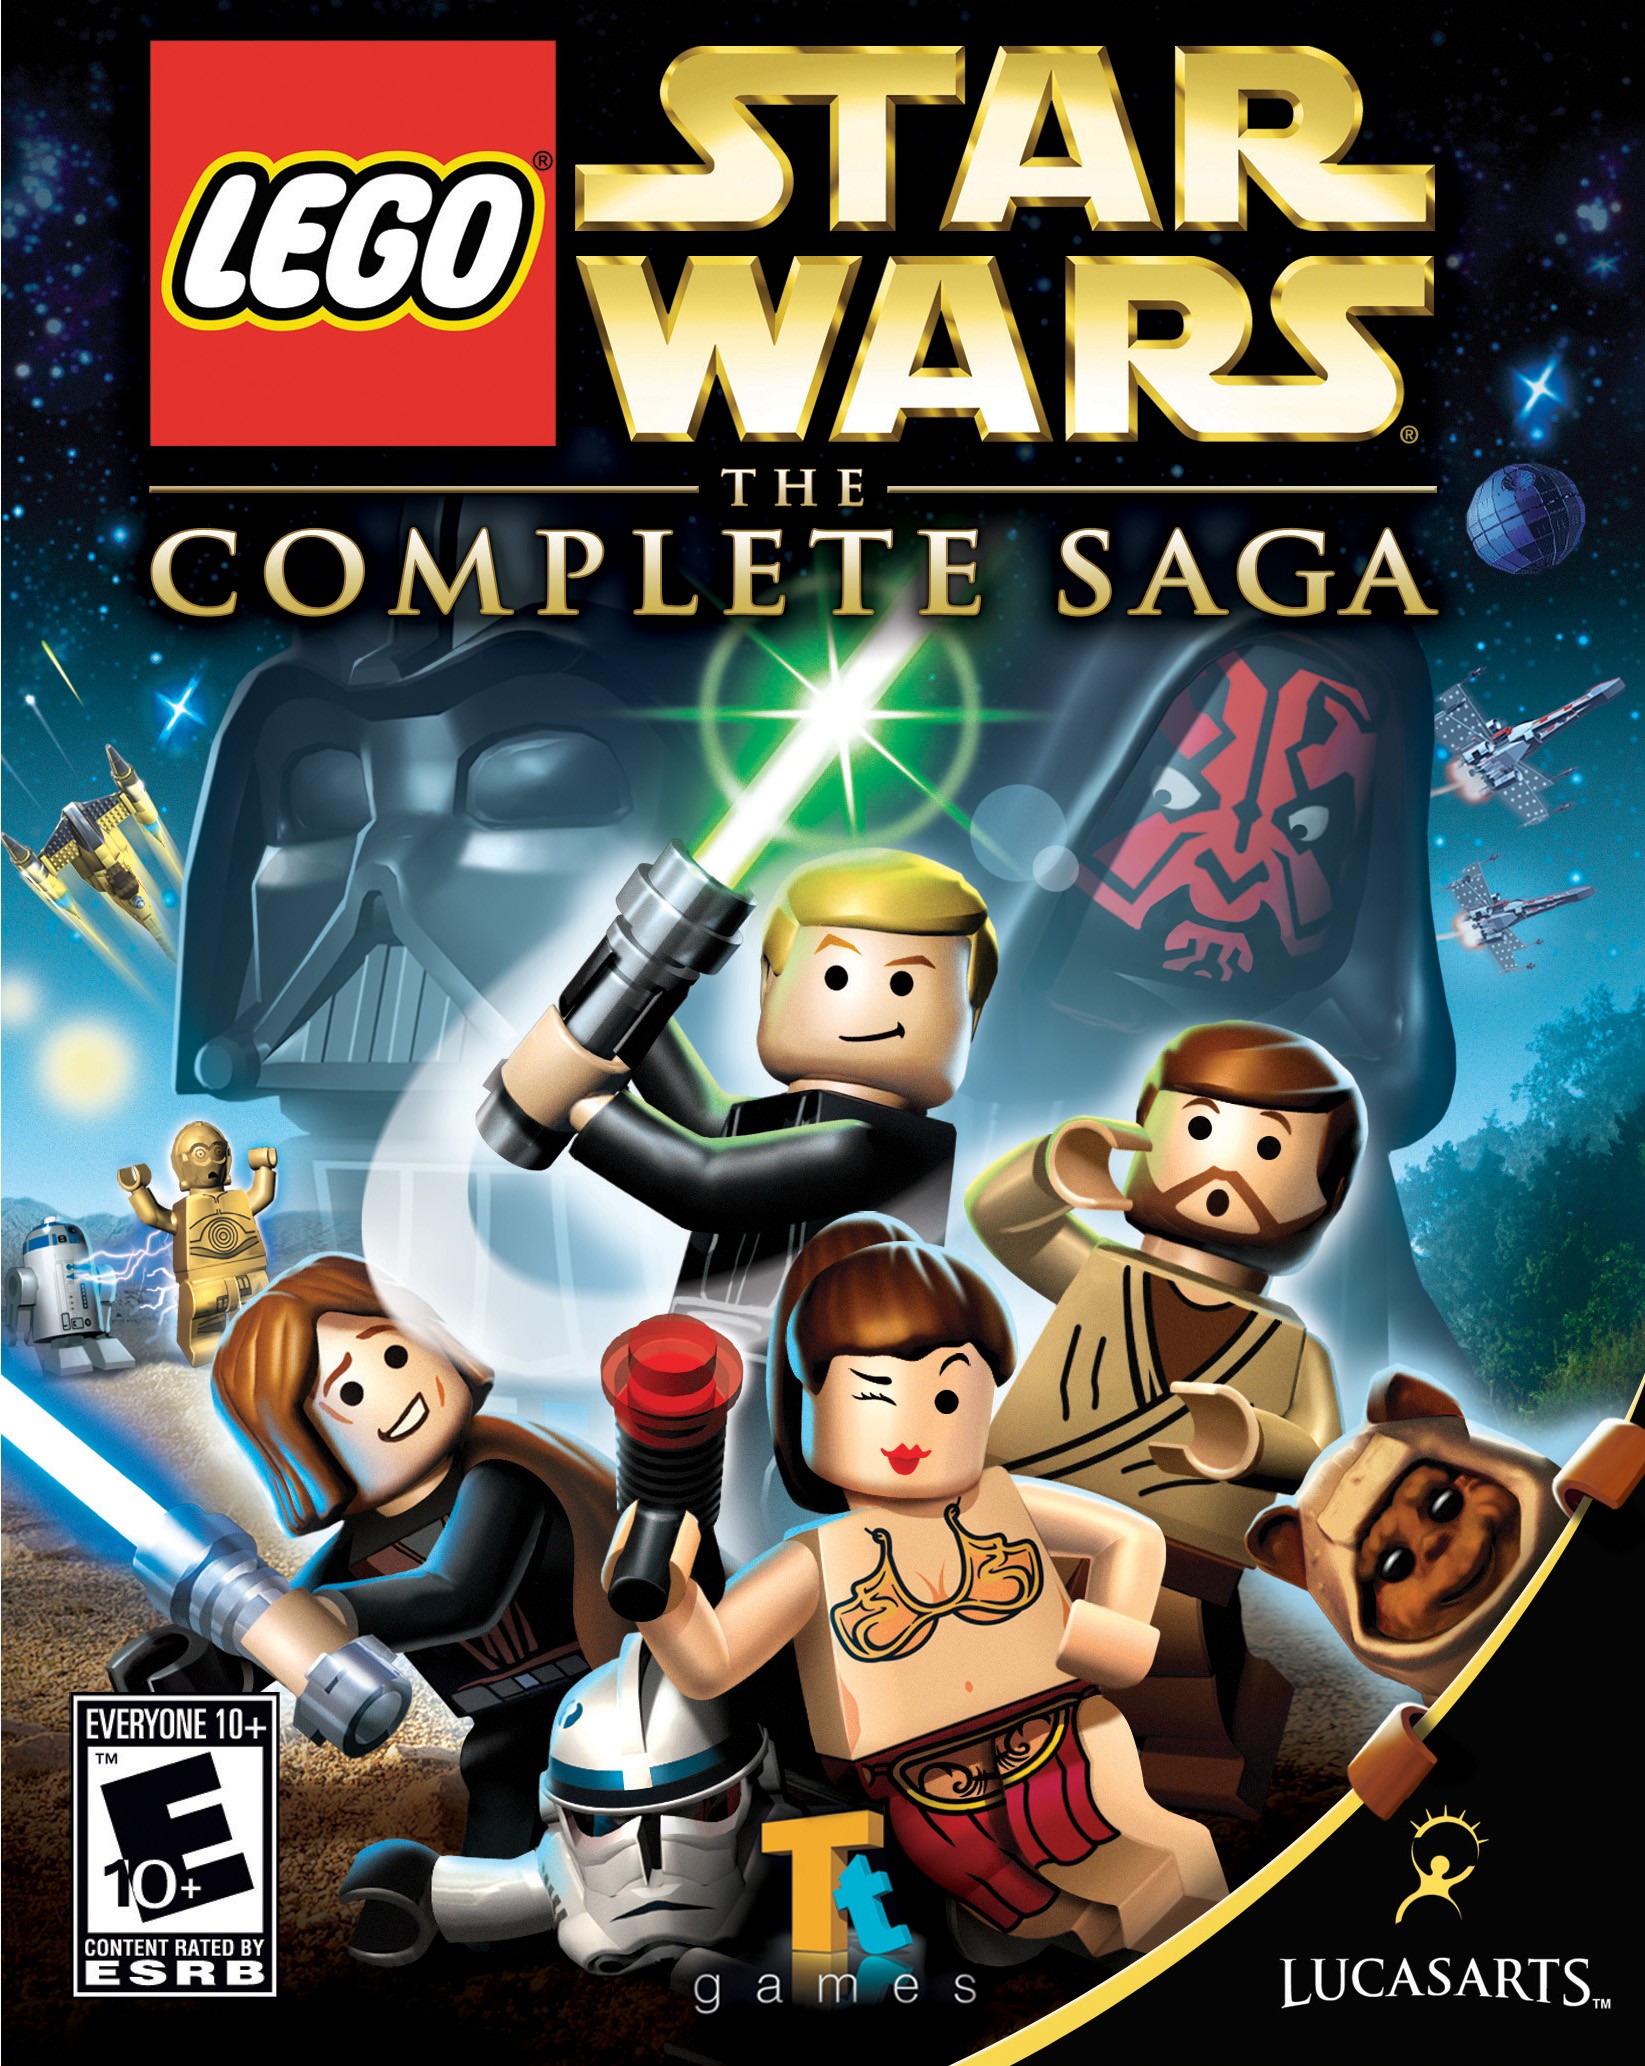 fodspor Fascinate spole TGDB - Browse - Game - LEGO Star Wars: The Complete Saga